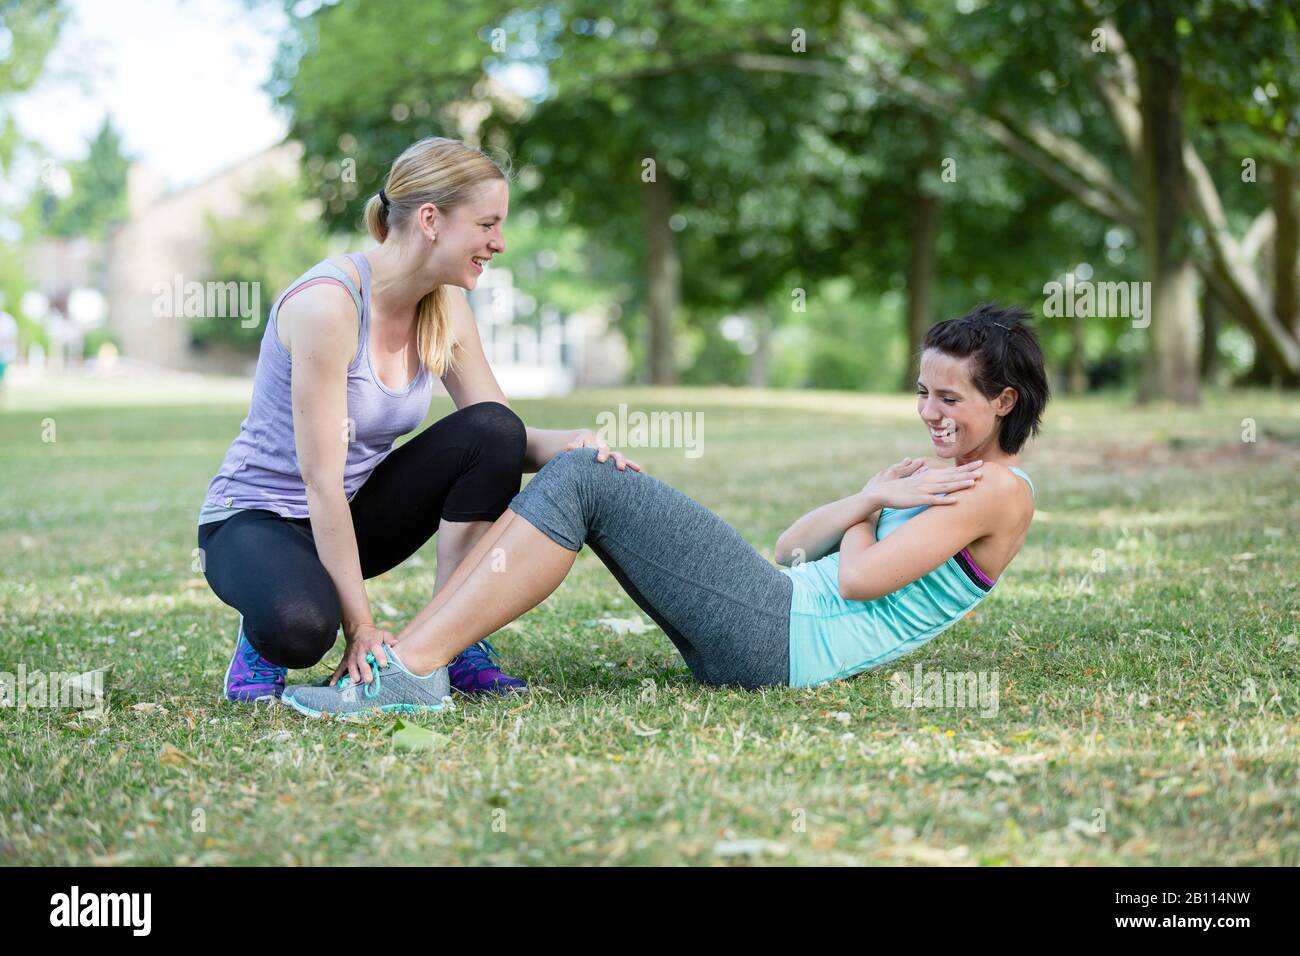 Two women doing strength training Stock Photo